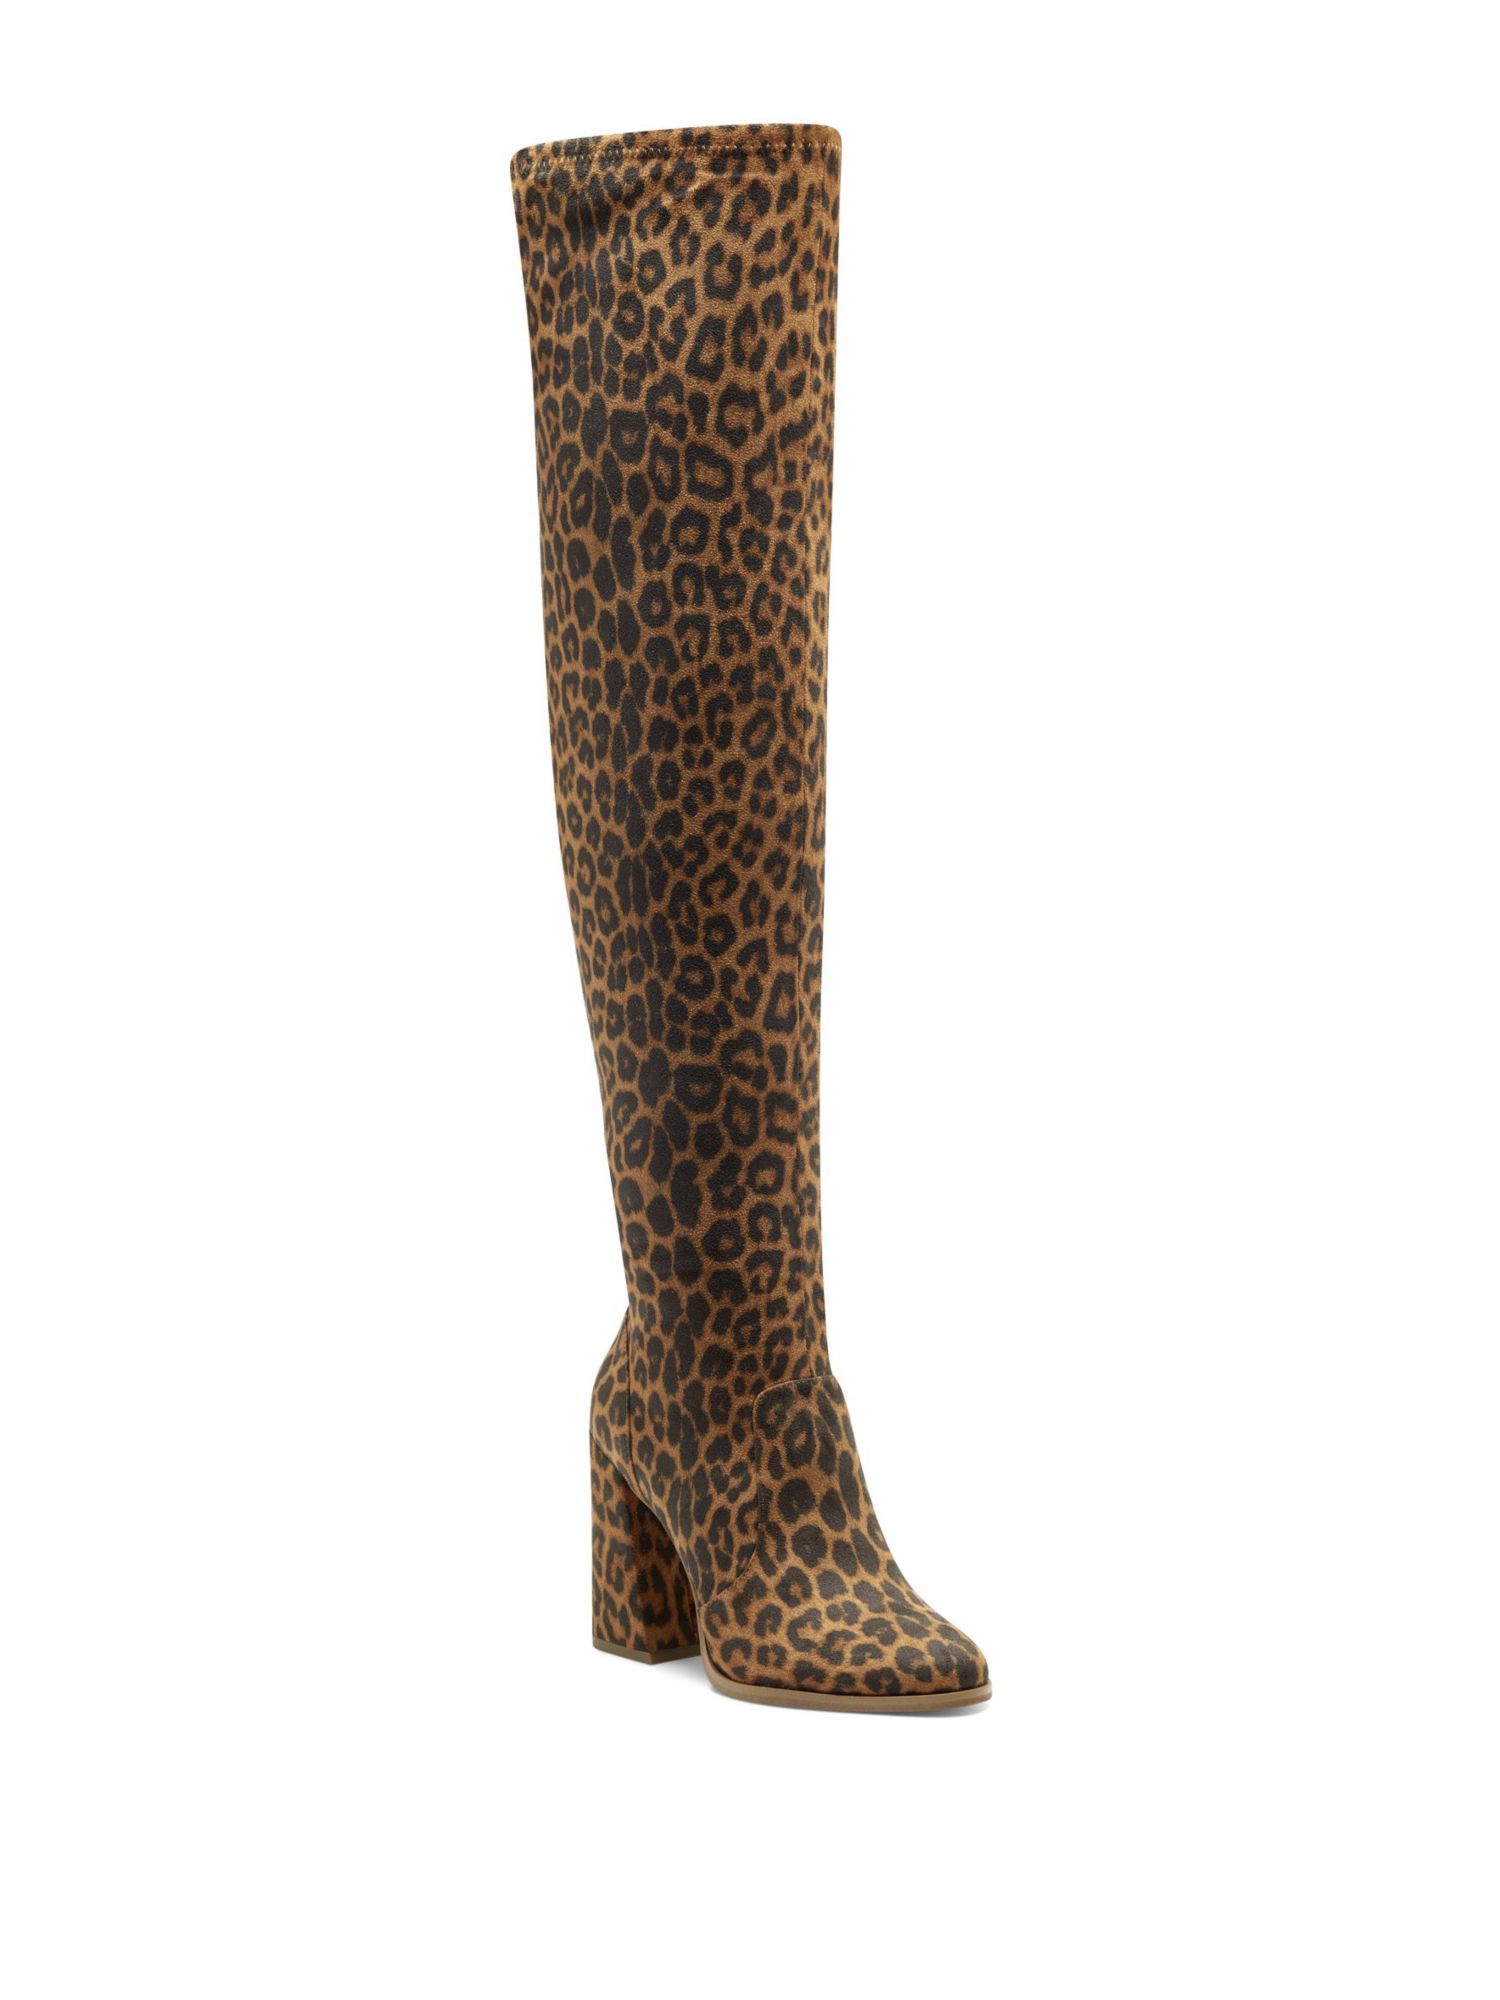 JESSICA SIMPSON Womens Beige Animal Print Padded Brixten Round Toe Block Heel Zip-Up Dress Boots Shoes 6.5 M